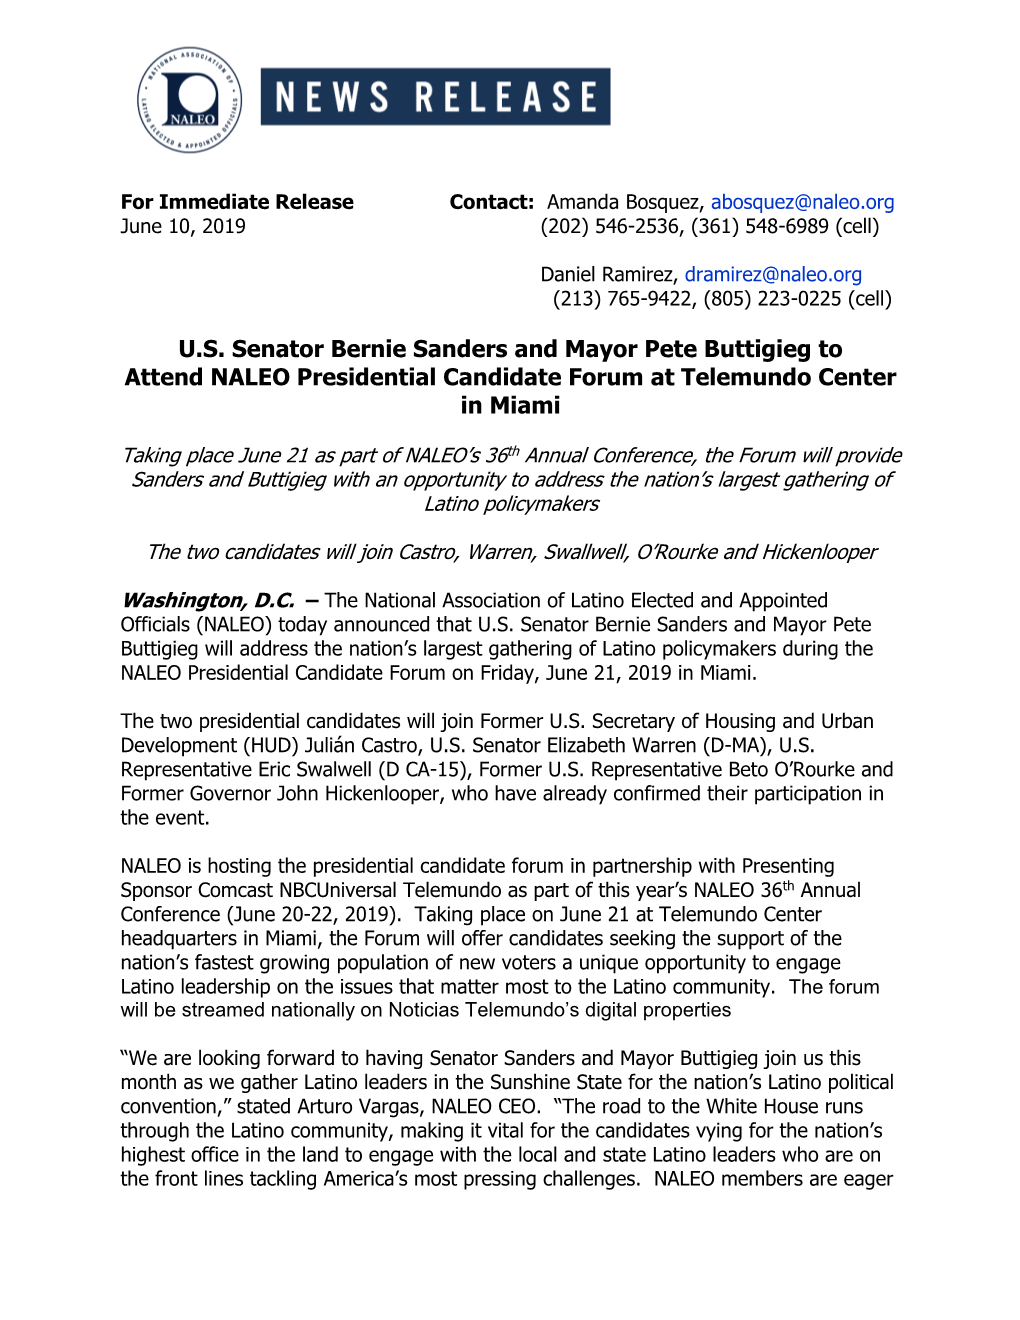 U.S. Senator Bernie Sanders and Mayor Pete Buttigieg to Attend NALEO Presidential Candidate Forum at Telemundo Center in Miami